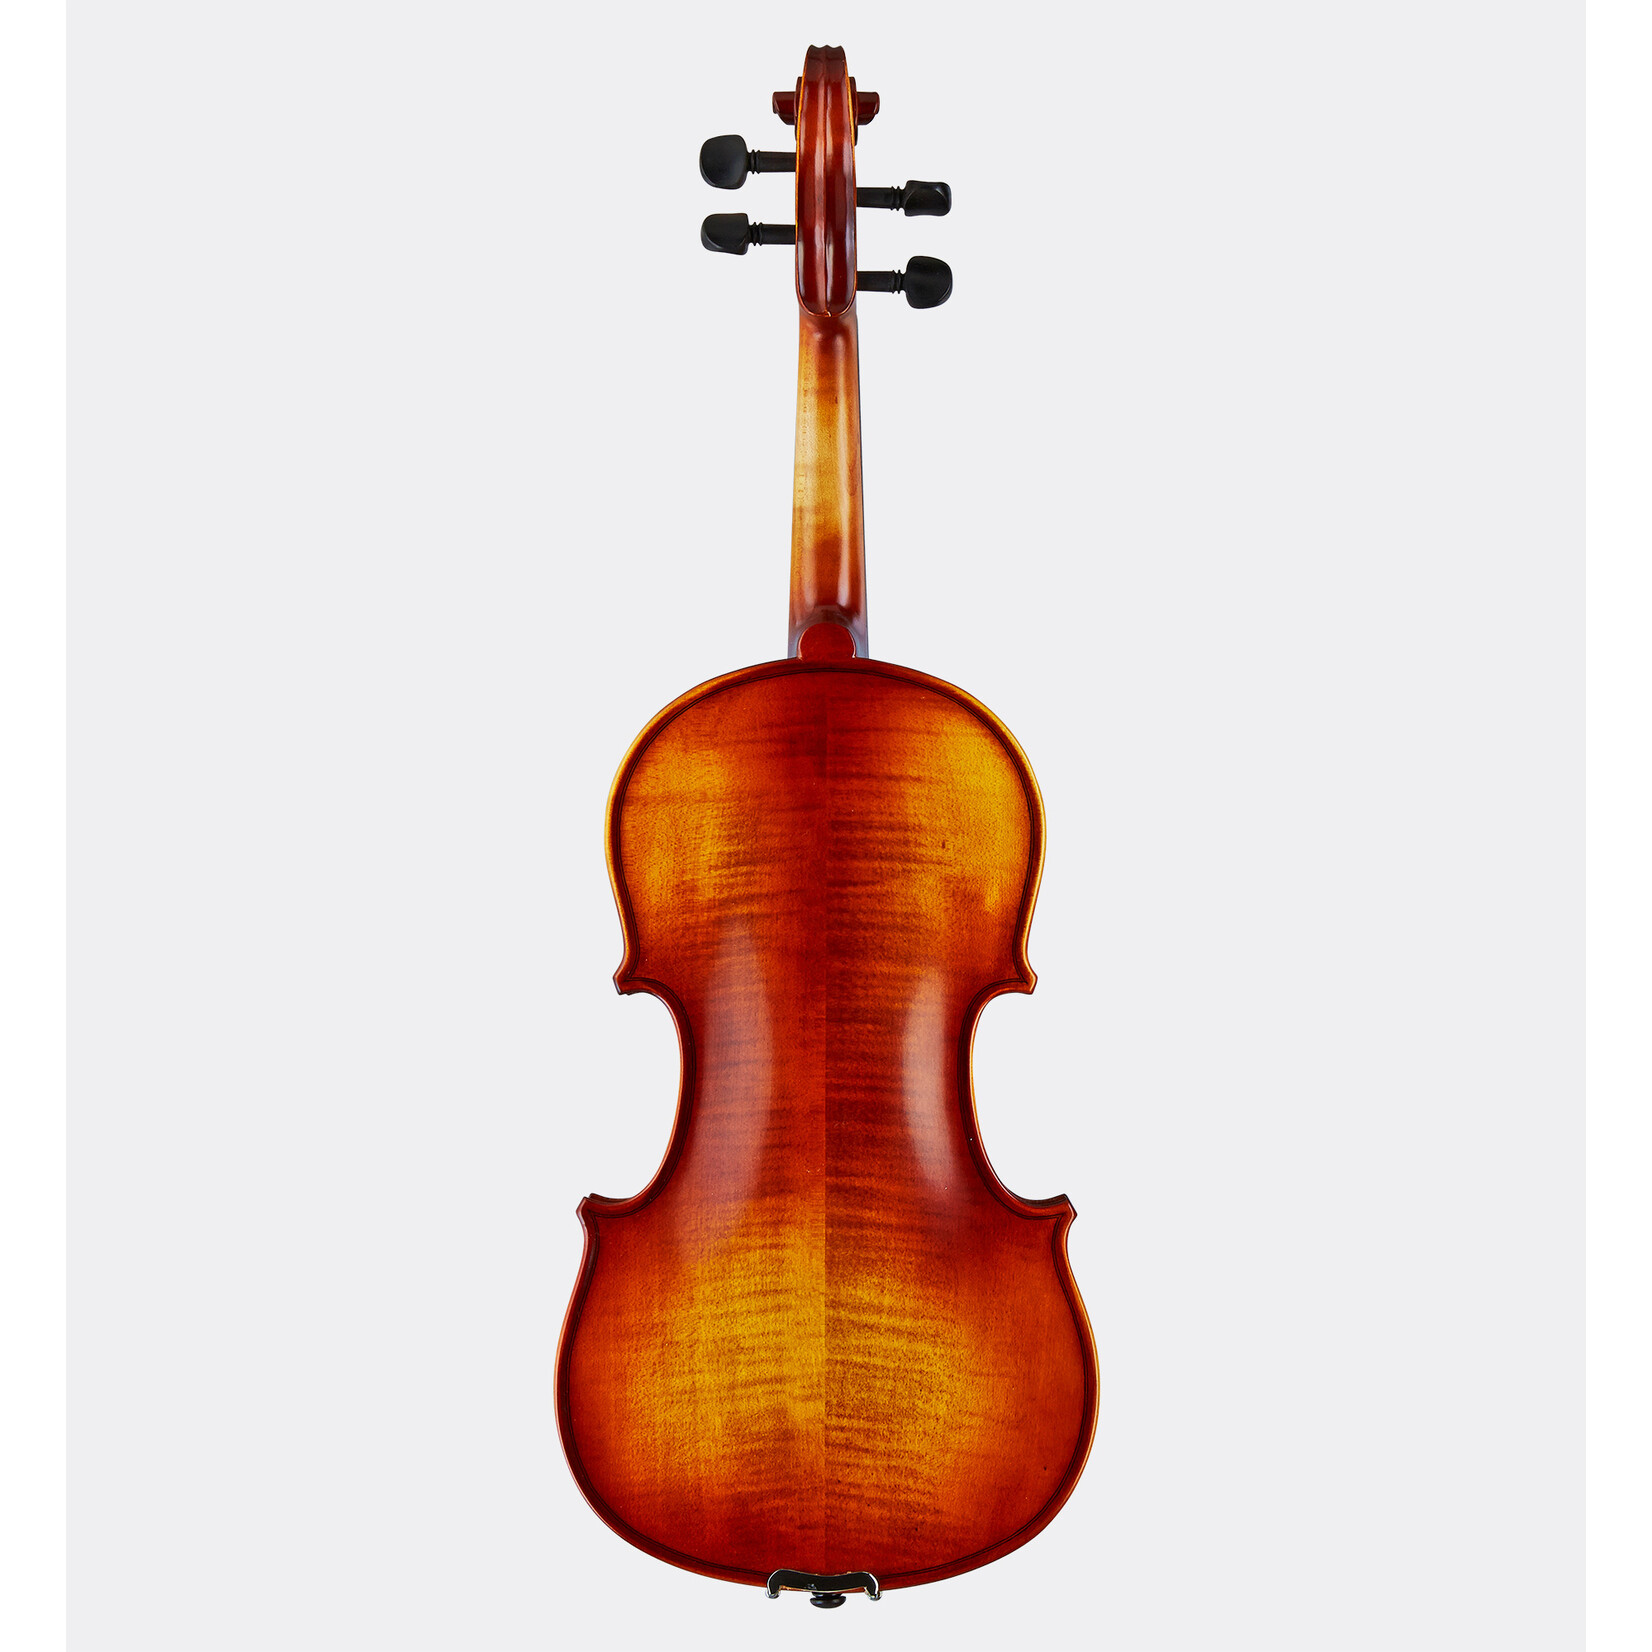 Sebastian 110VN12 1/2 Size Violin Outfit